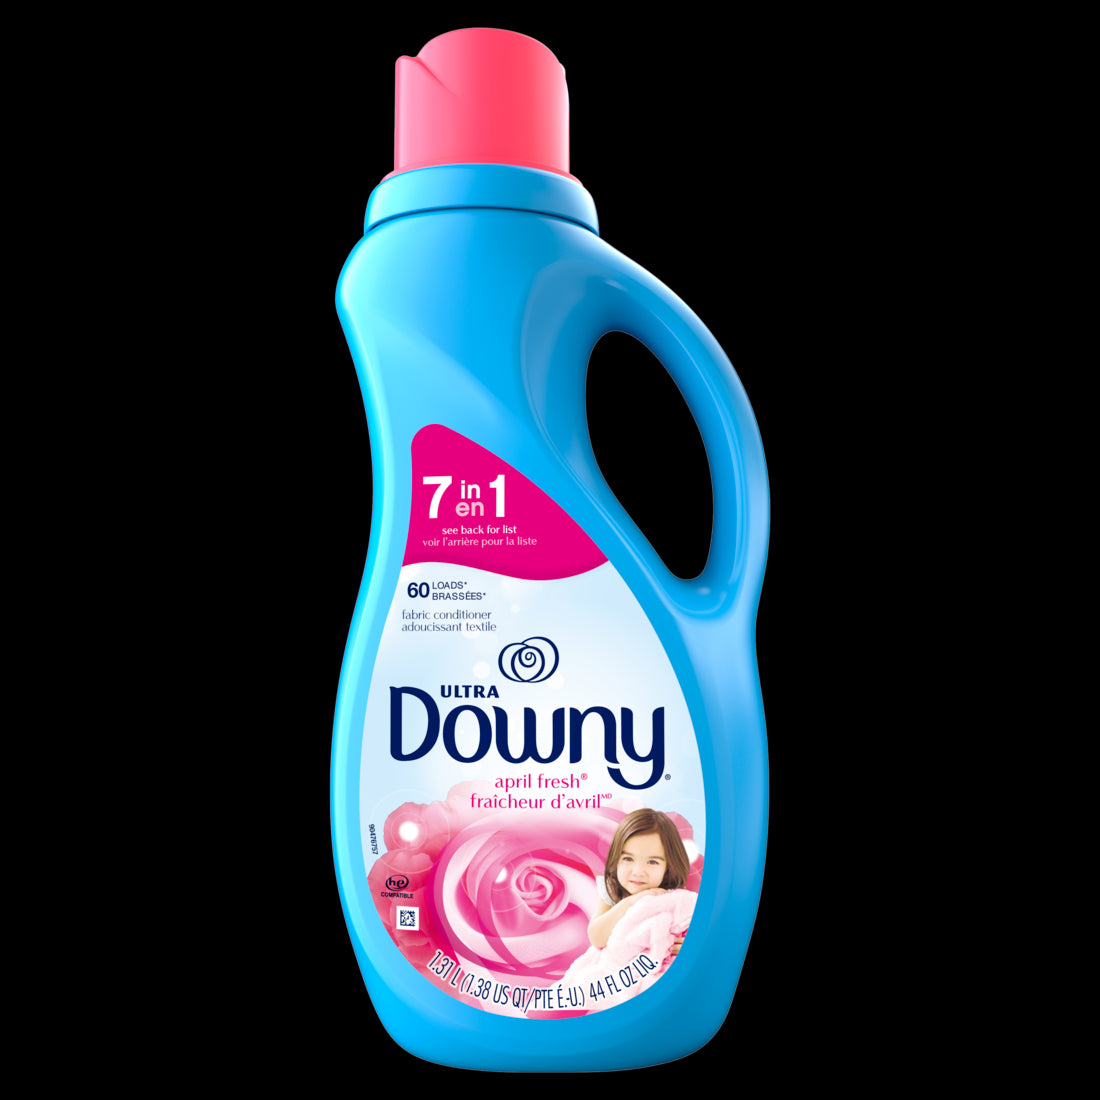 Downy Ultra Laundry Liquid Fabric Softener April Fresh 60 Loads - 44oz/6pk